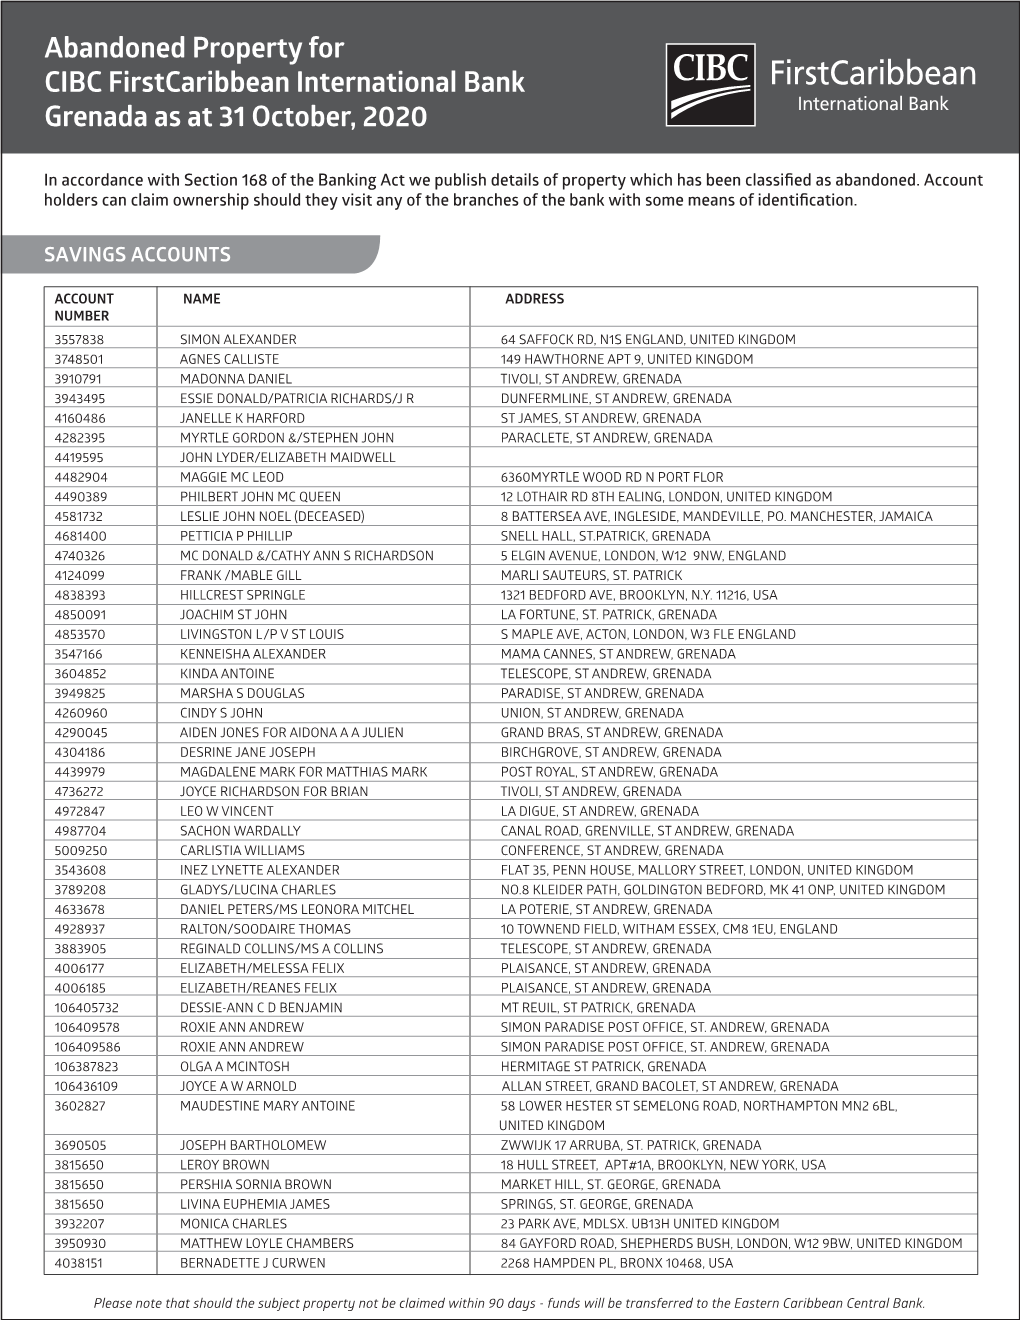 Grenada 2020 Abandoned Properties List